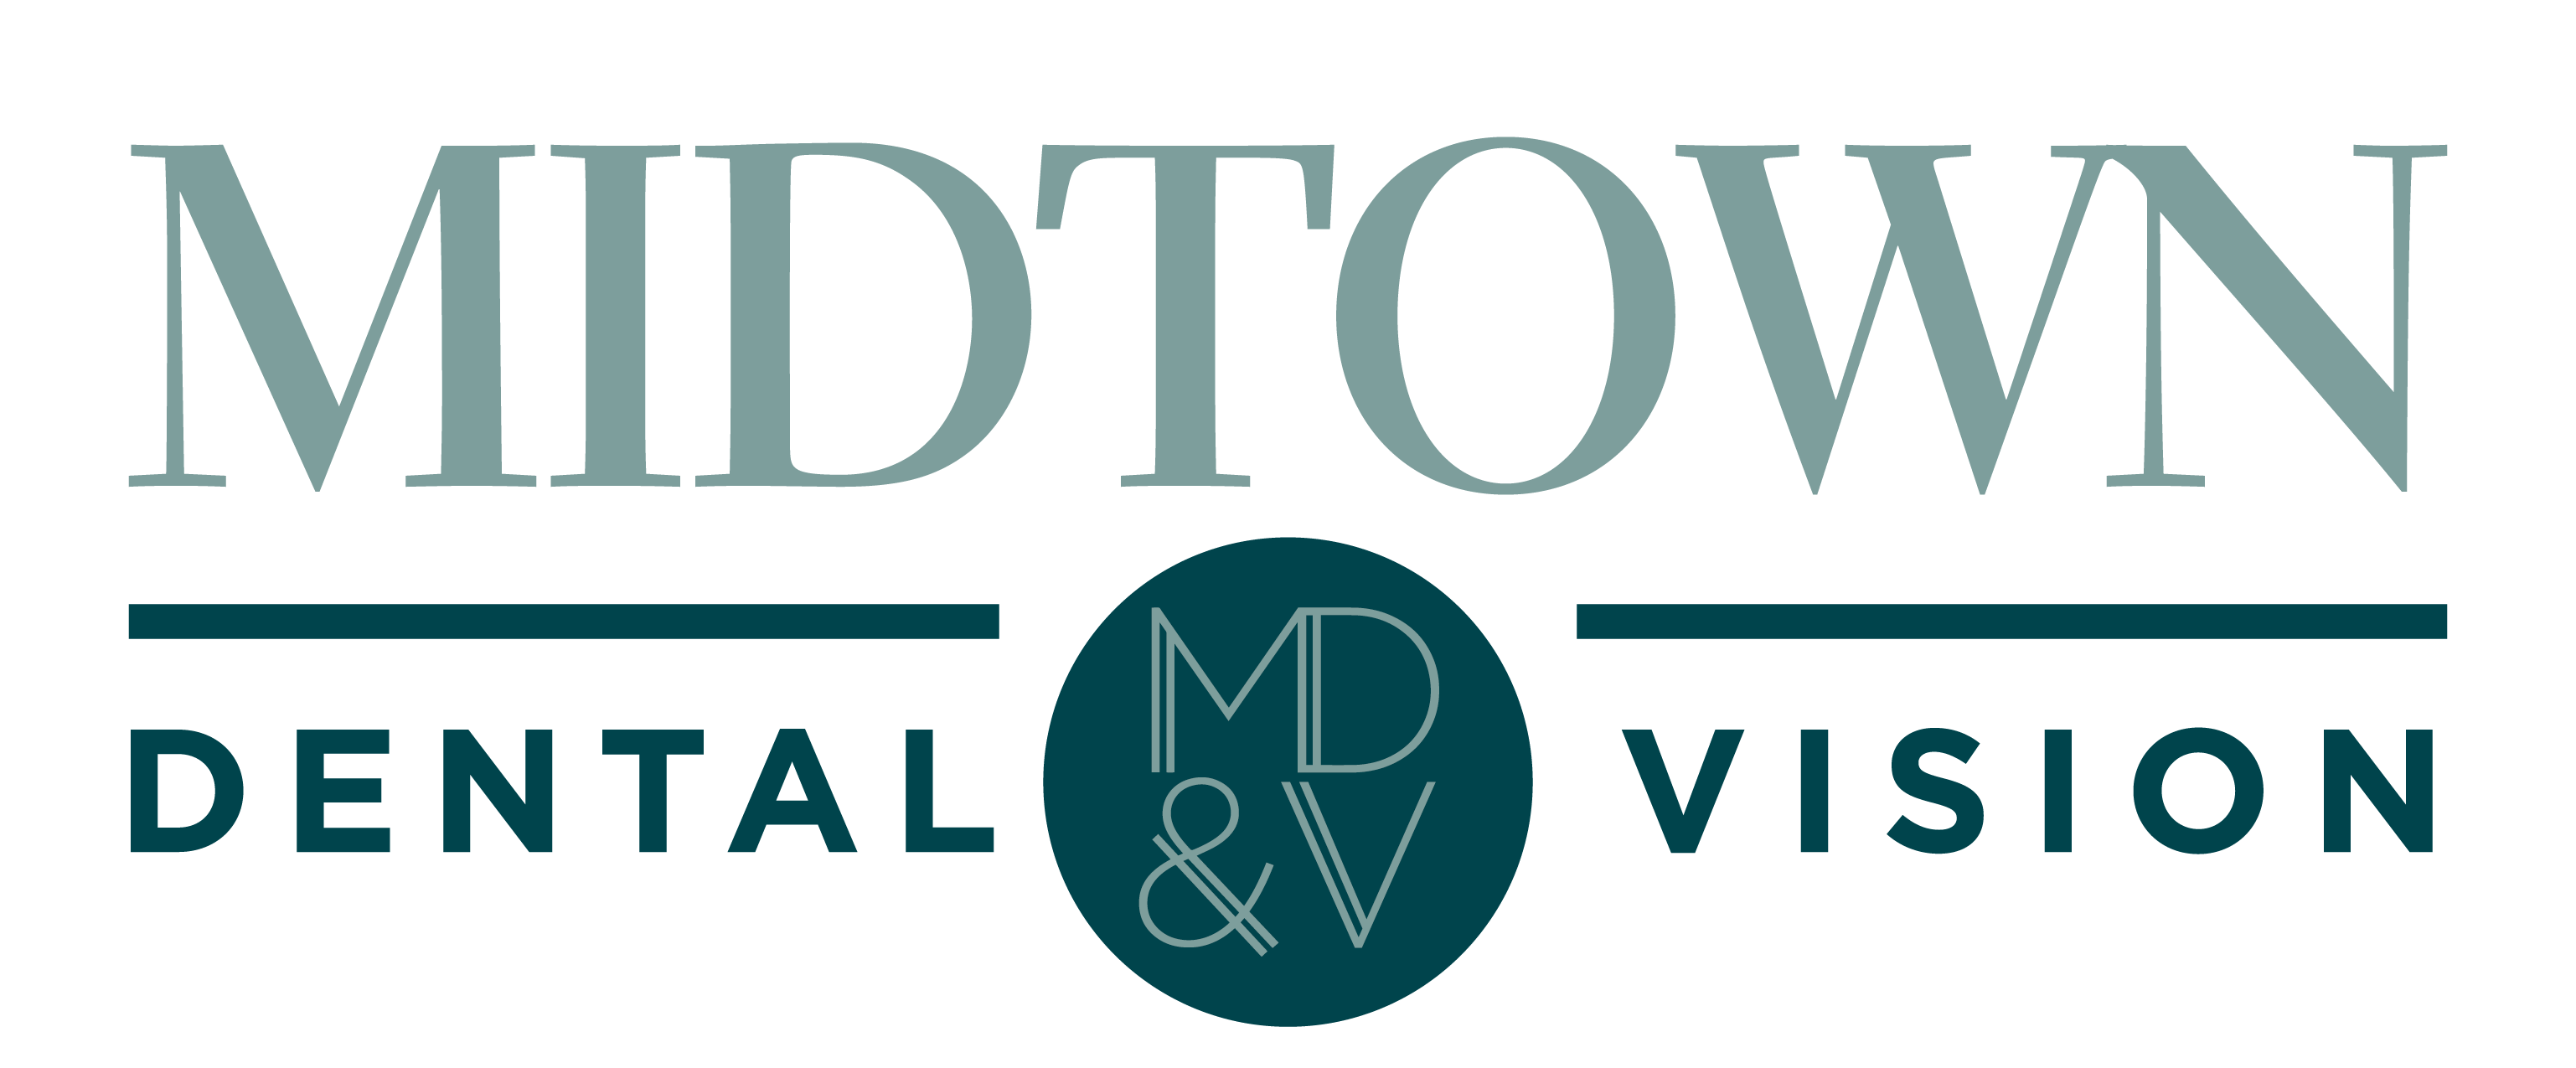 Midtown Dental and Vision